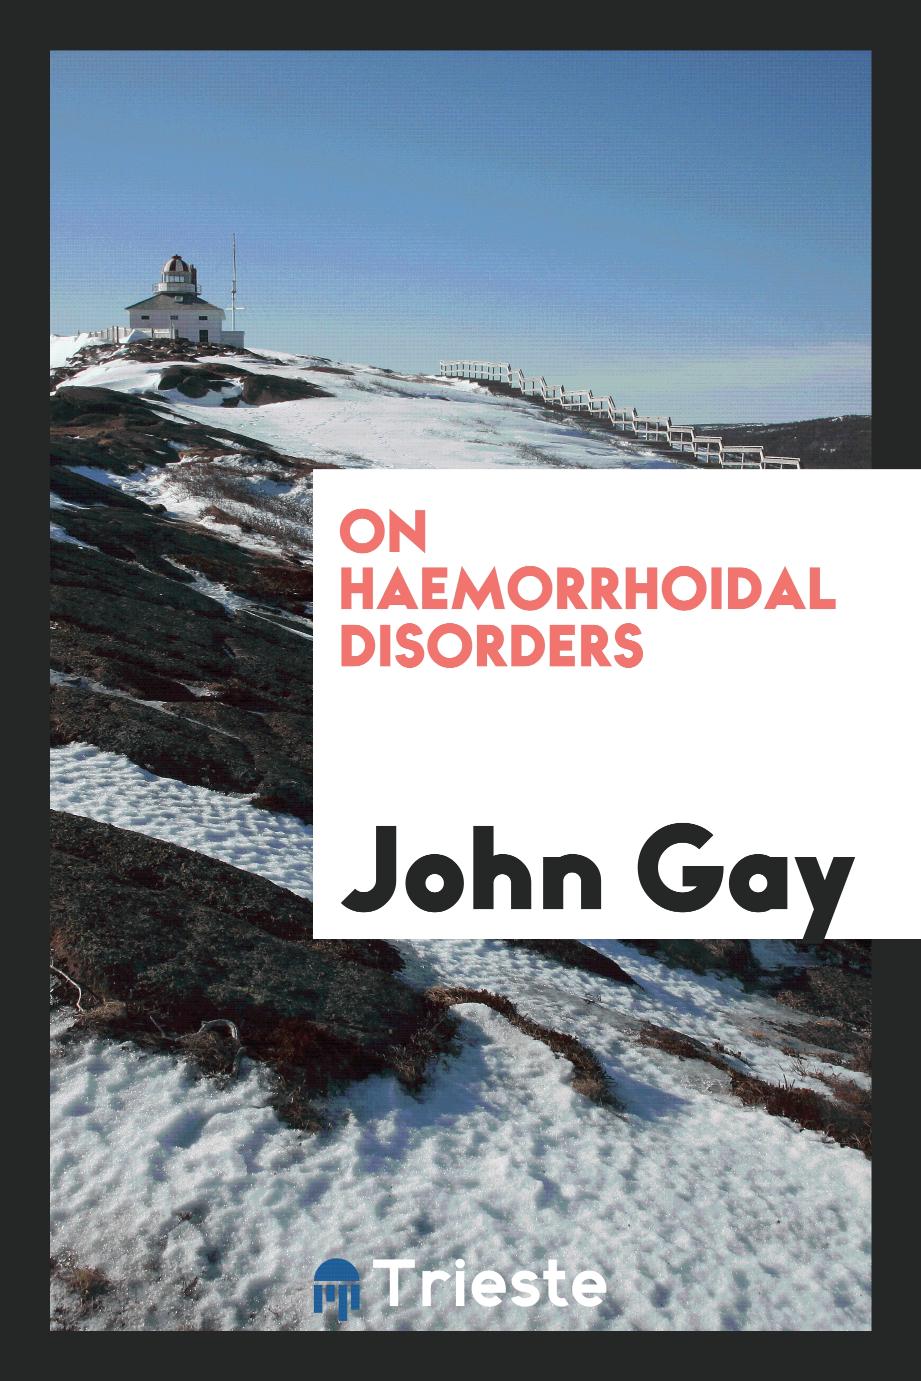 On haemorrhoidal disorders